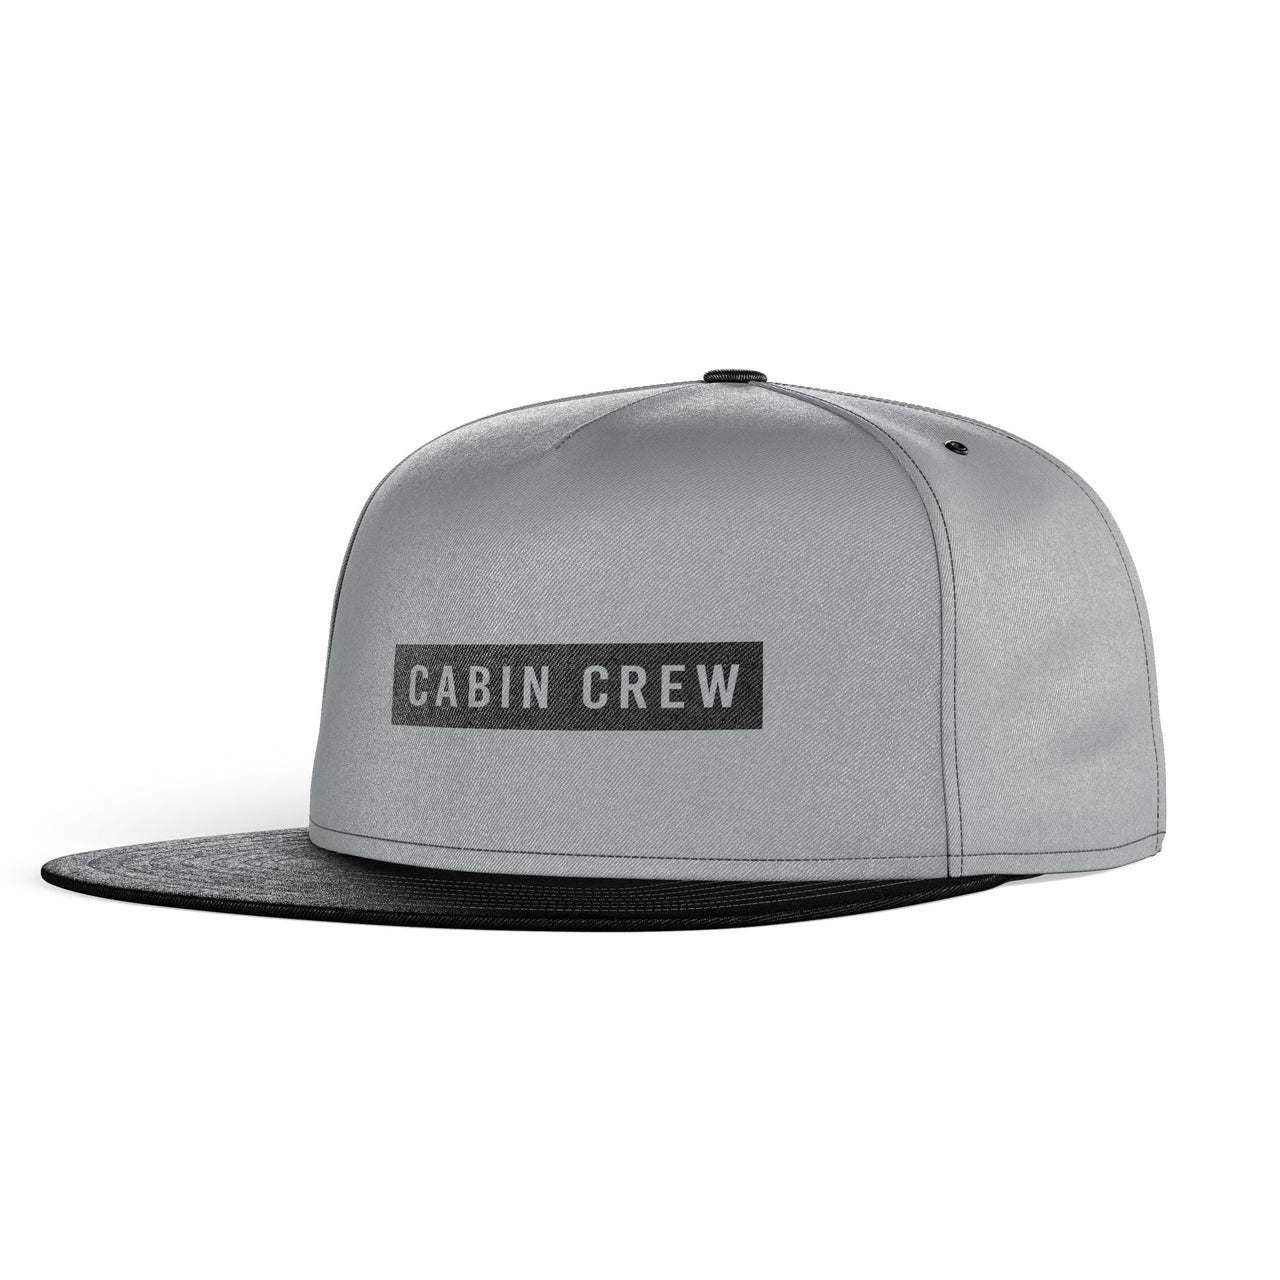 Cabin Crew Text Designed Snapback Caps & Hats